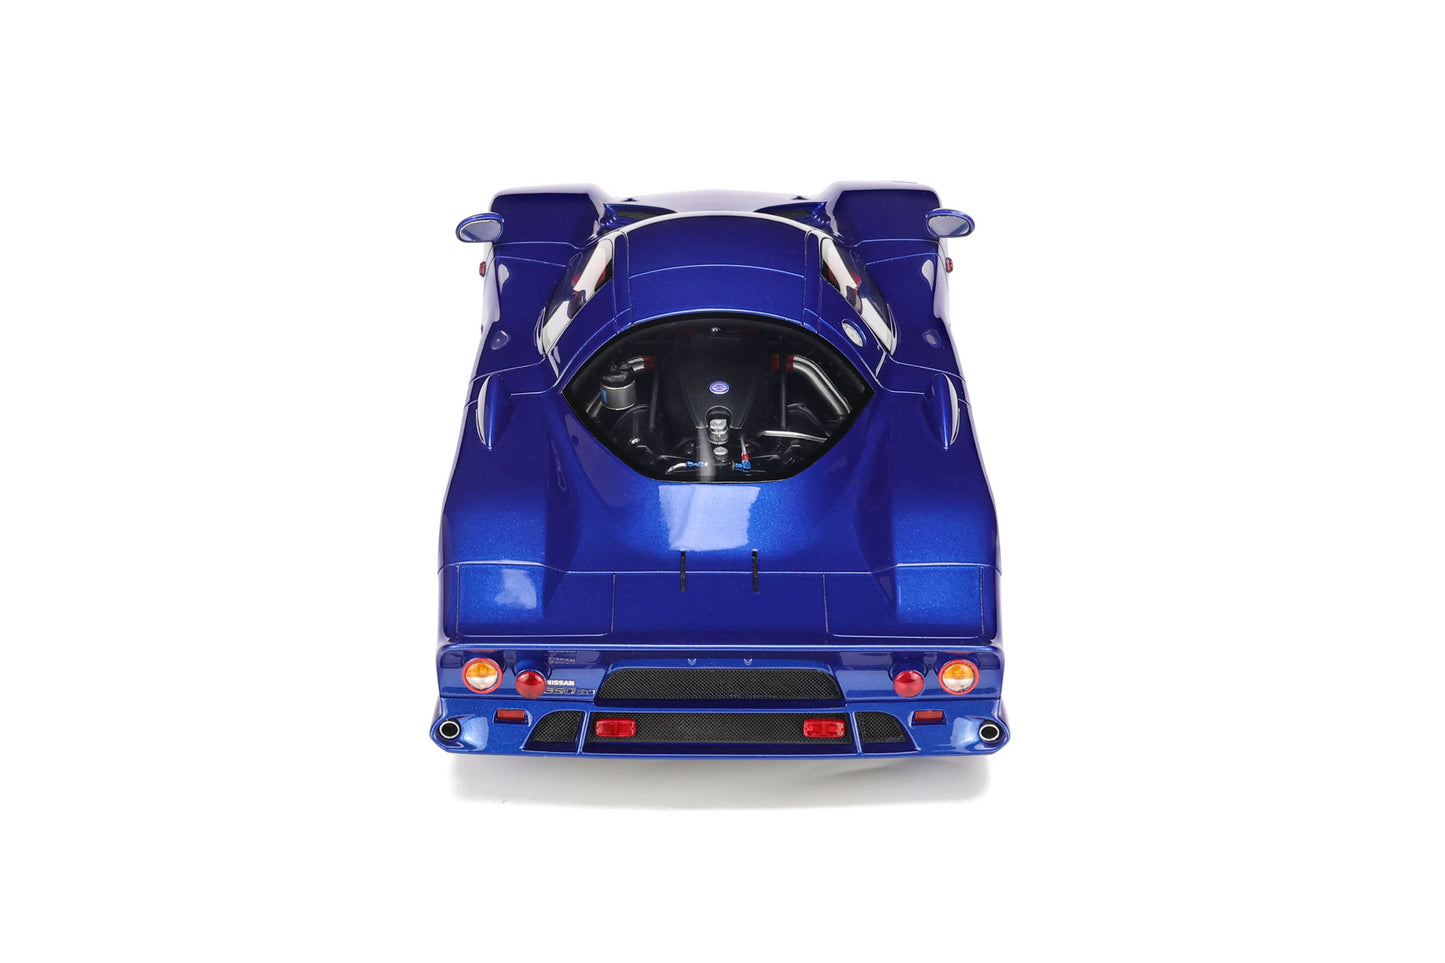 GT Spirit - Nissan R390 GT1 Road Car (Metallic Blue) 1:18 Scale Model Car